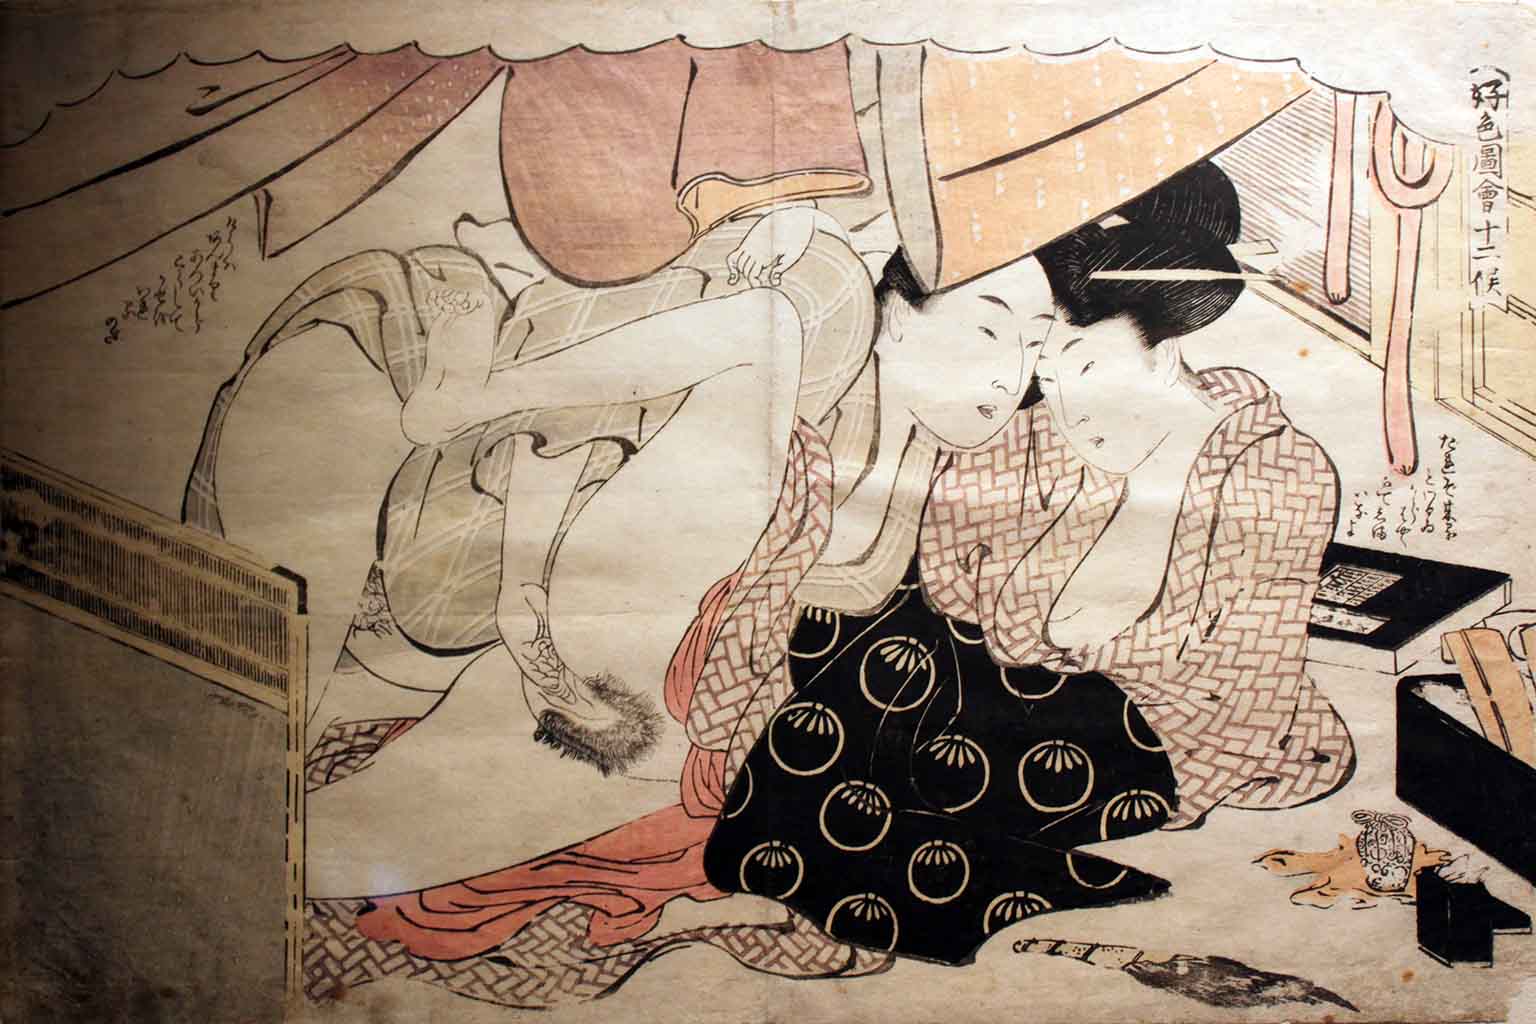 Китагава Утамаро (Kitagawa Utamaro) “Colour-Shunga“